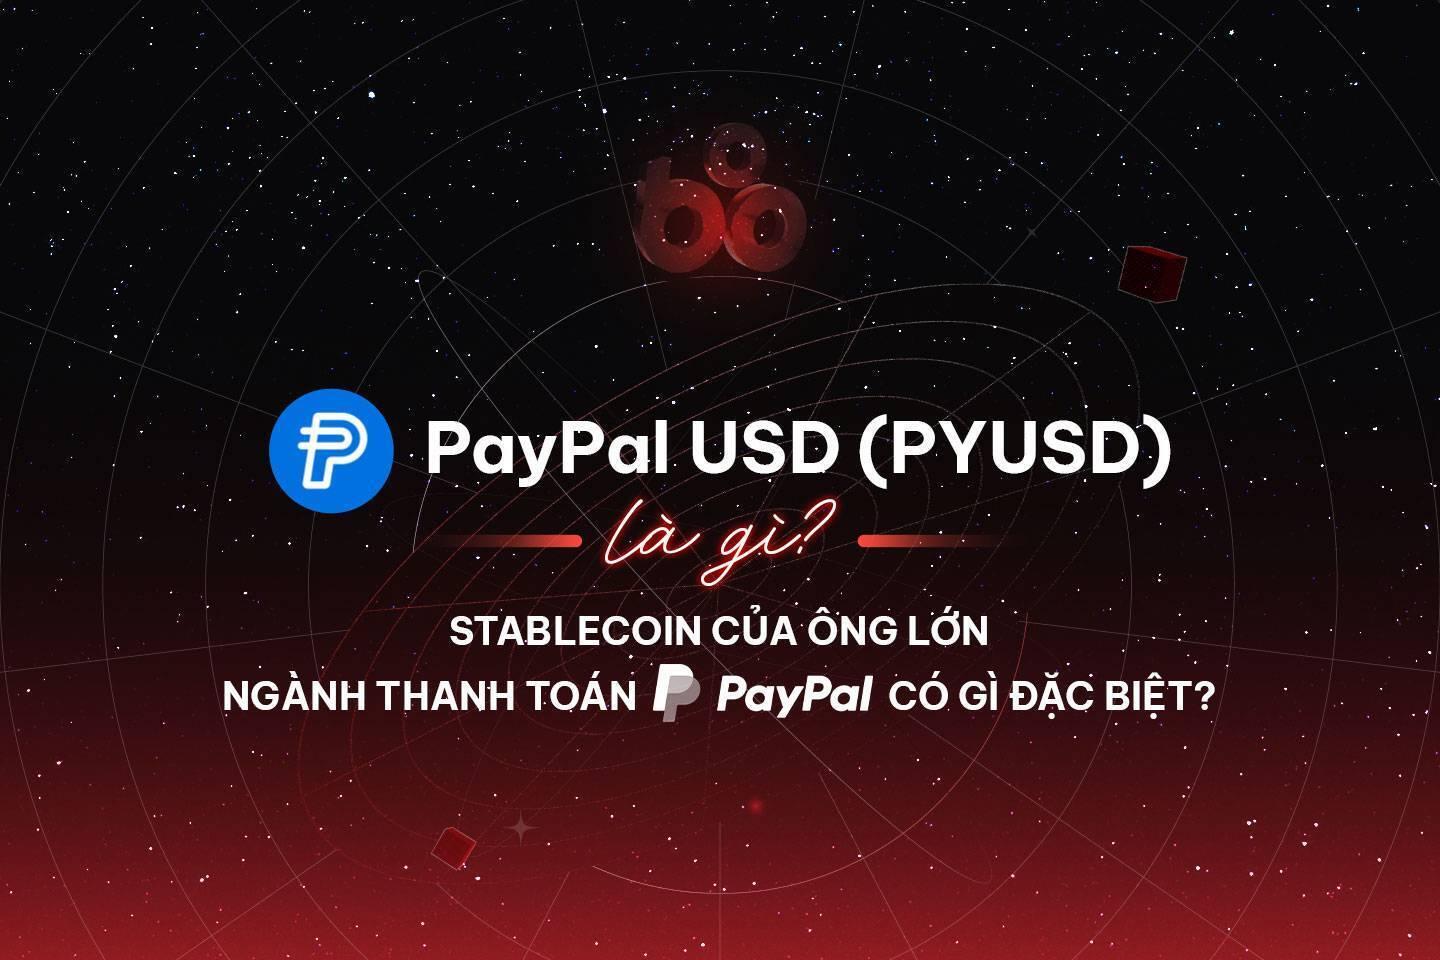 paypal-usd-pyusd-la-gi-stablecoin-cua-ong-lon-nganh-thanh-toan-paypal-co-gi-dac-biet